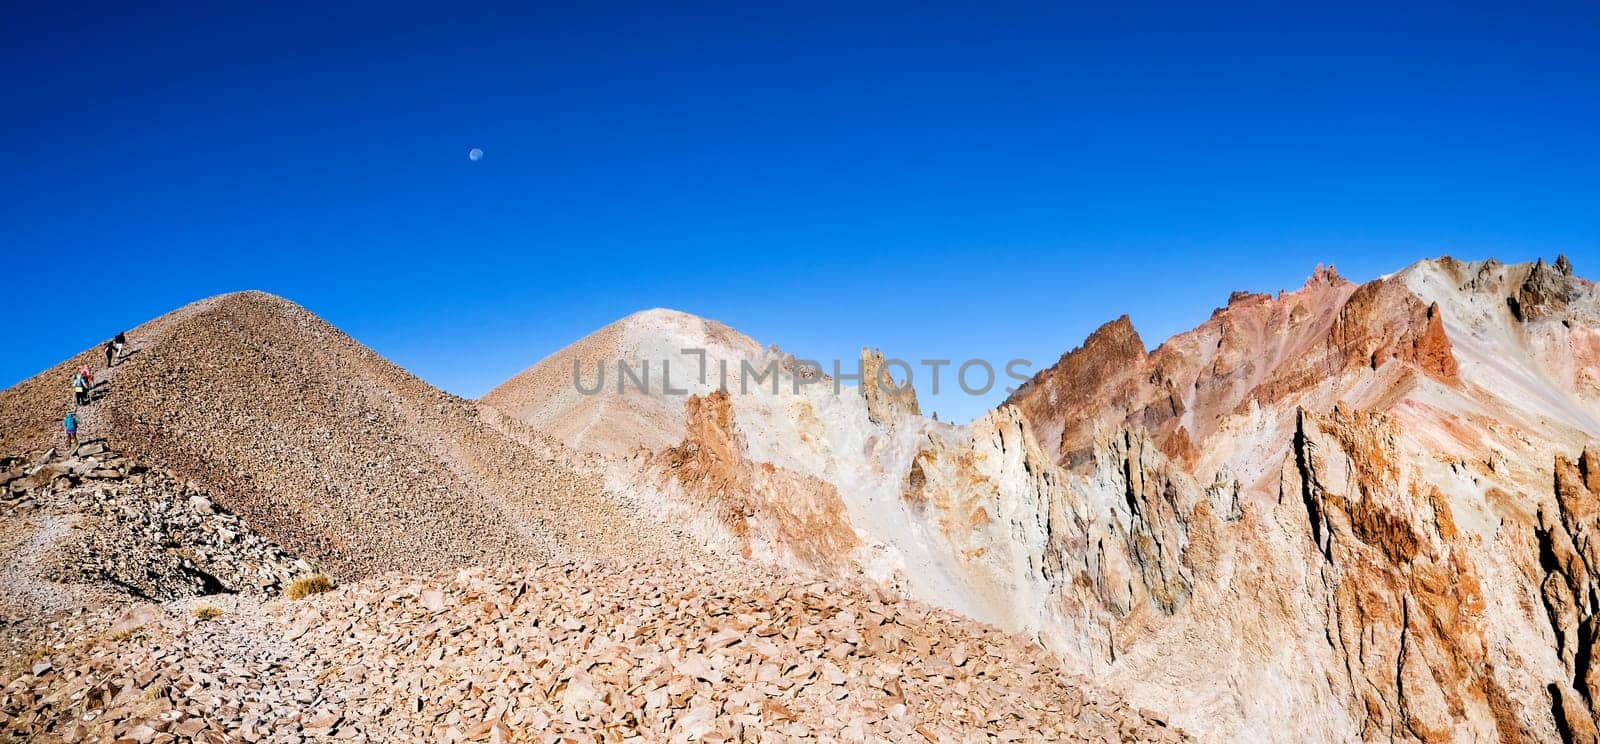 Stony mountains on blue sky background by GekaSkr